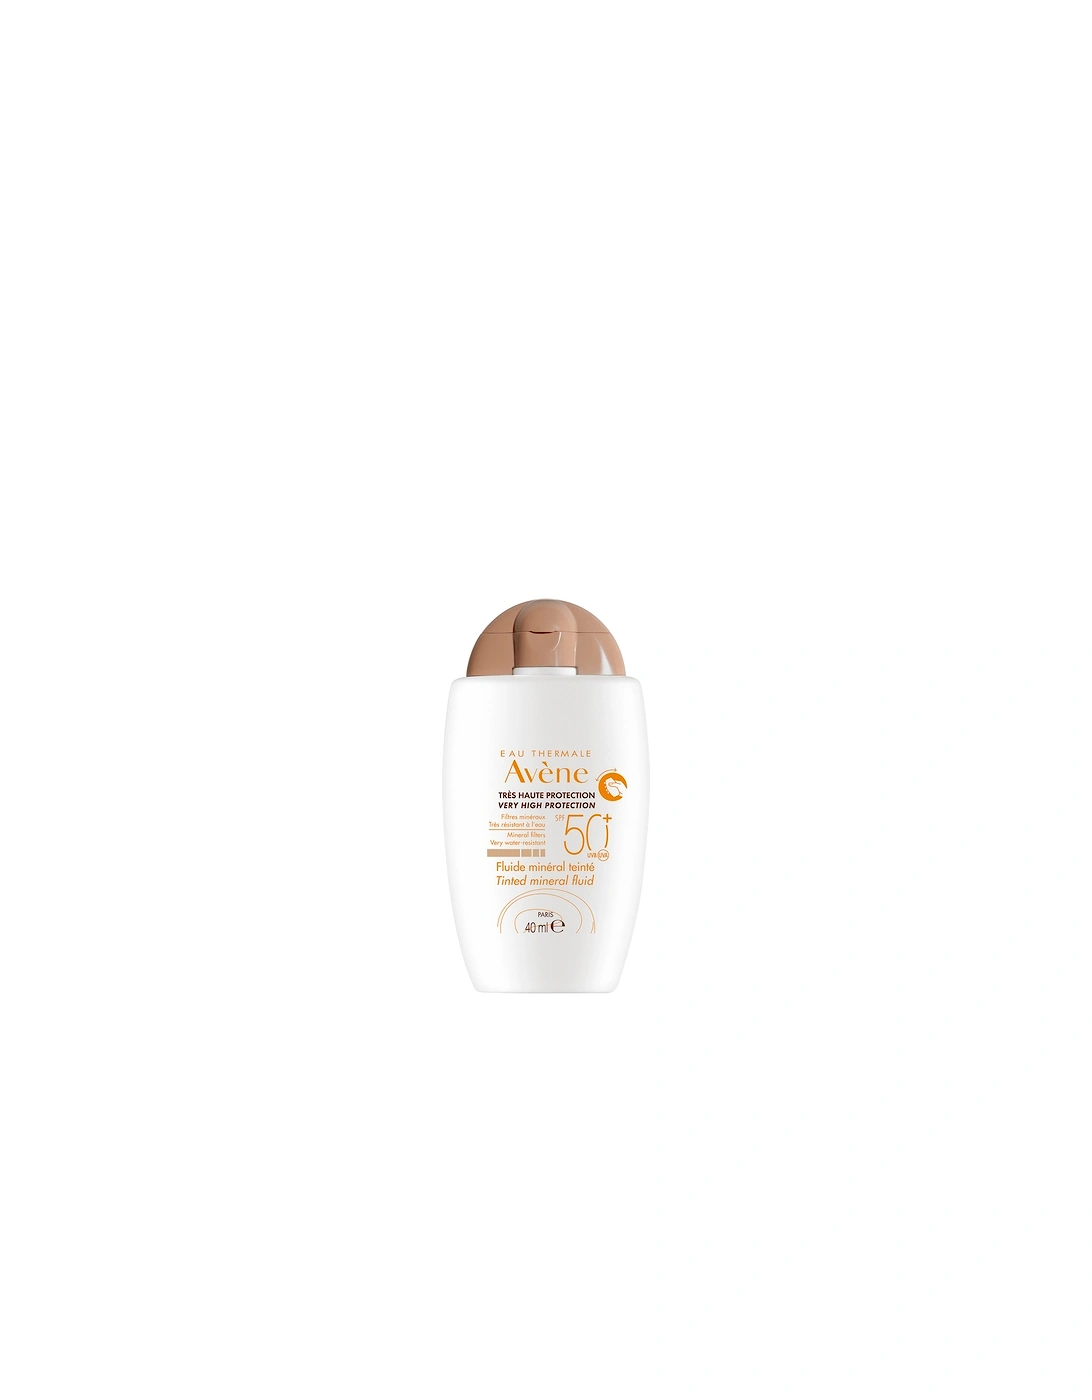 Avène Very High Protection Tinted Mineral Fluid SPF50+ Sun Cream for Intolerant Skin 40ml - Avene, 2 of 1